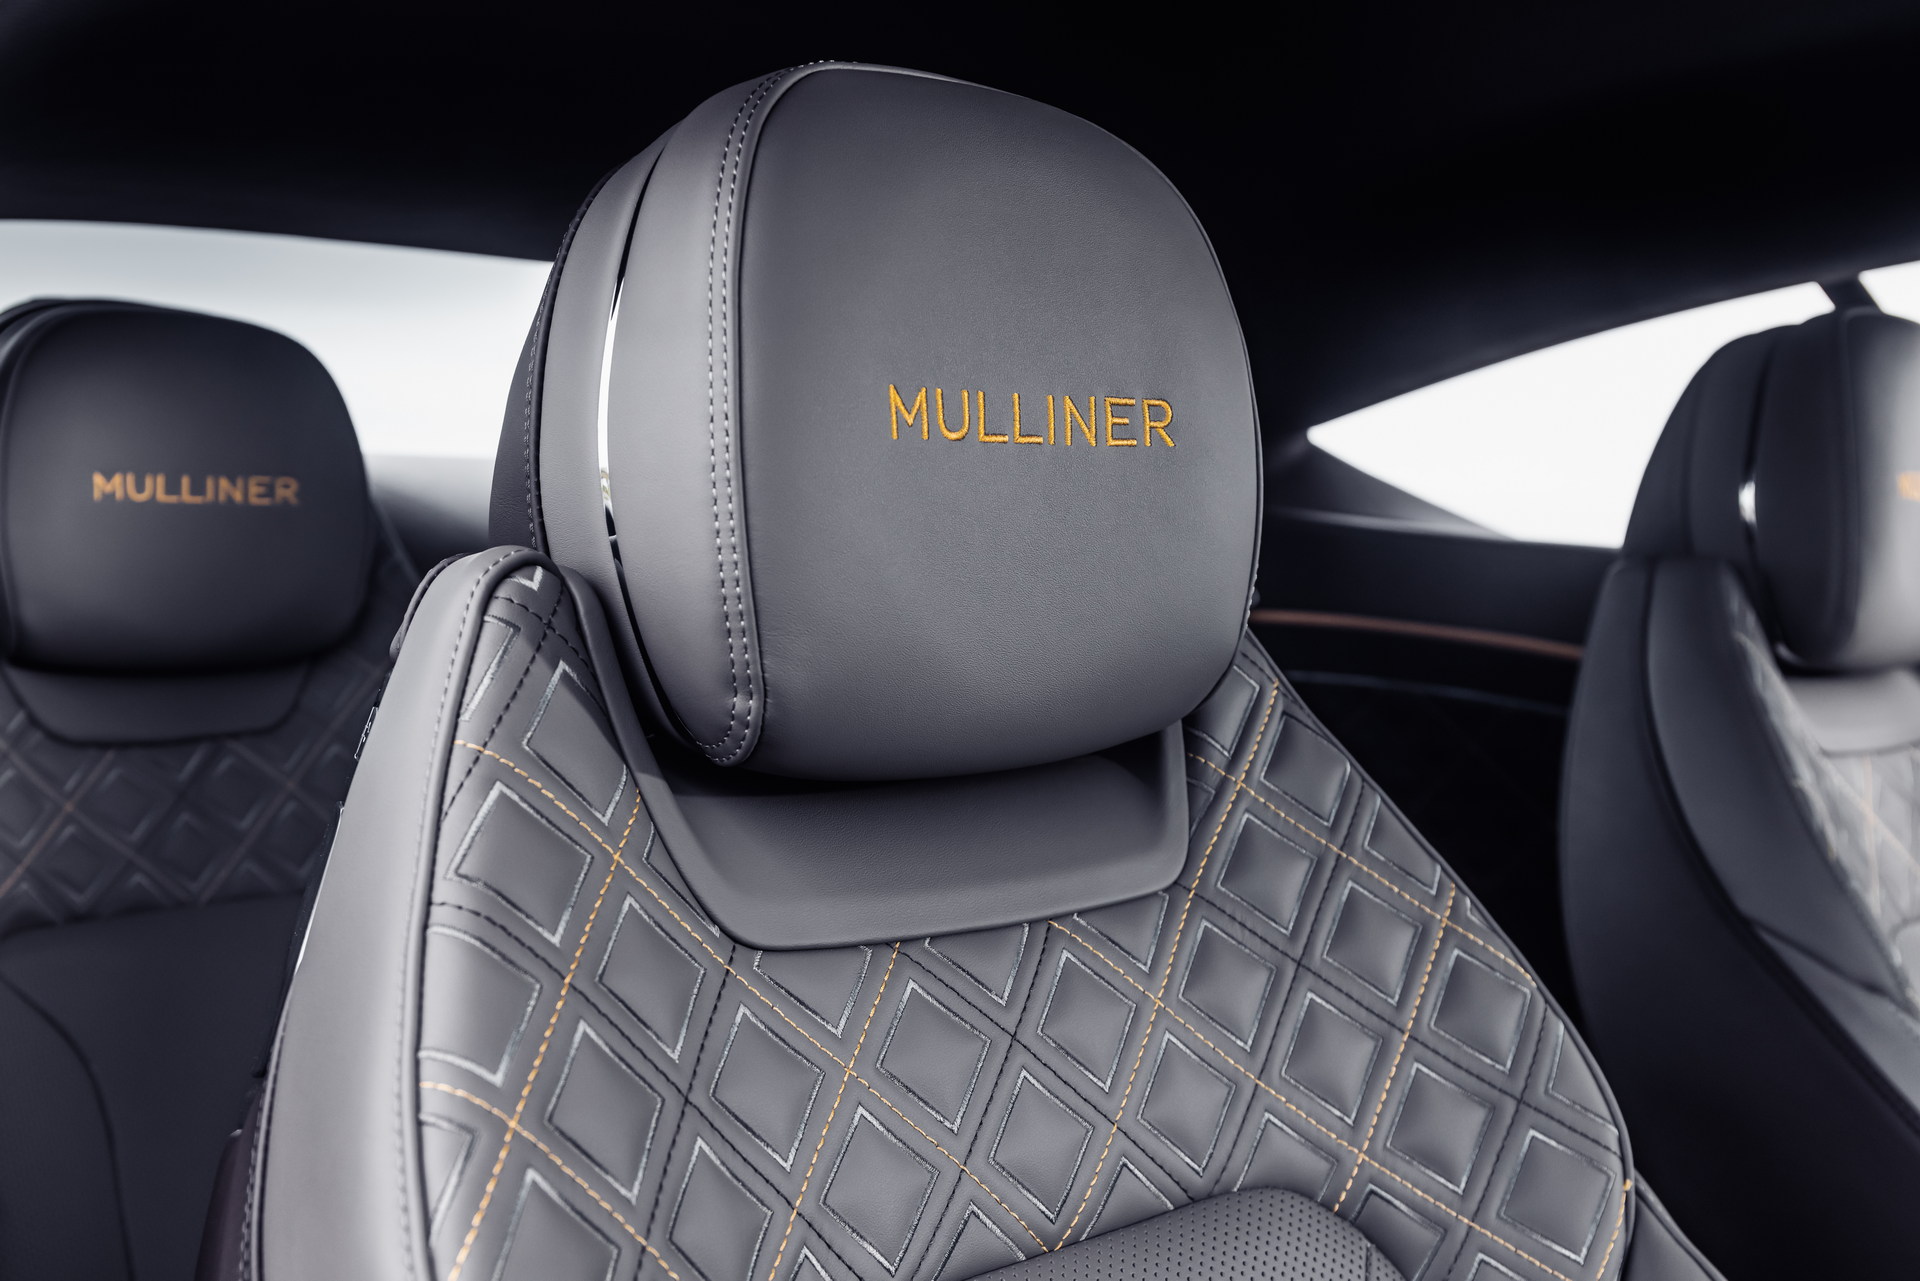 Continental GT Mulliner W12